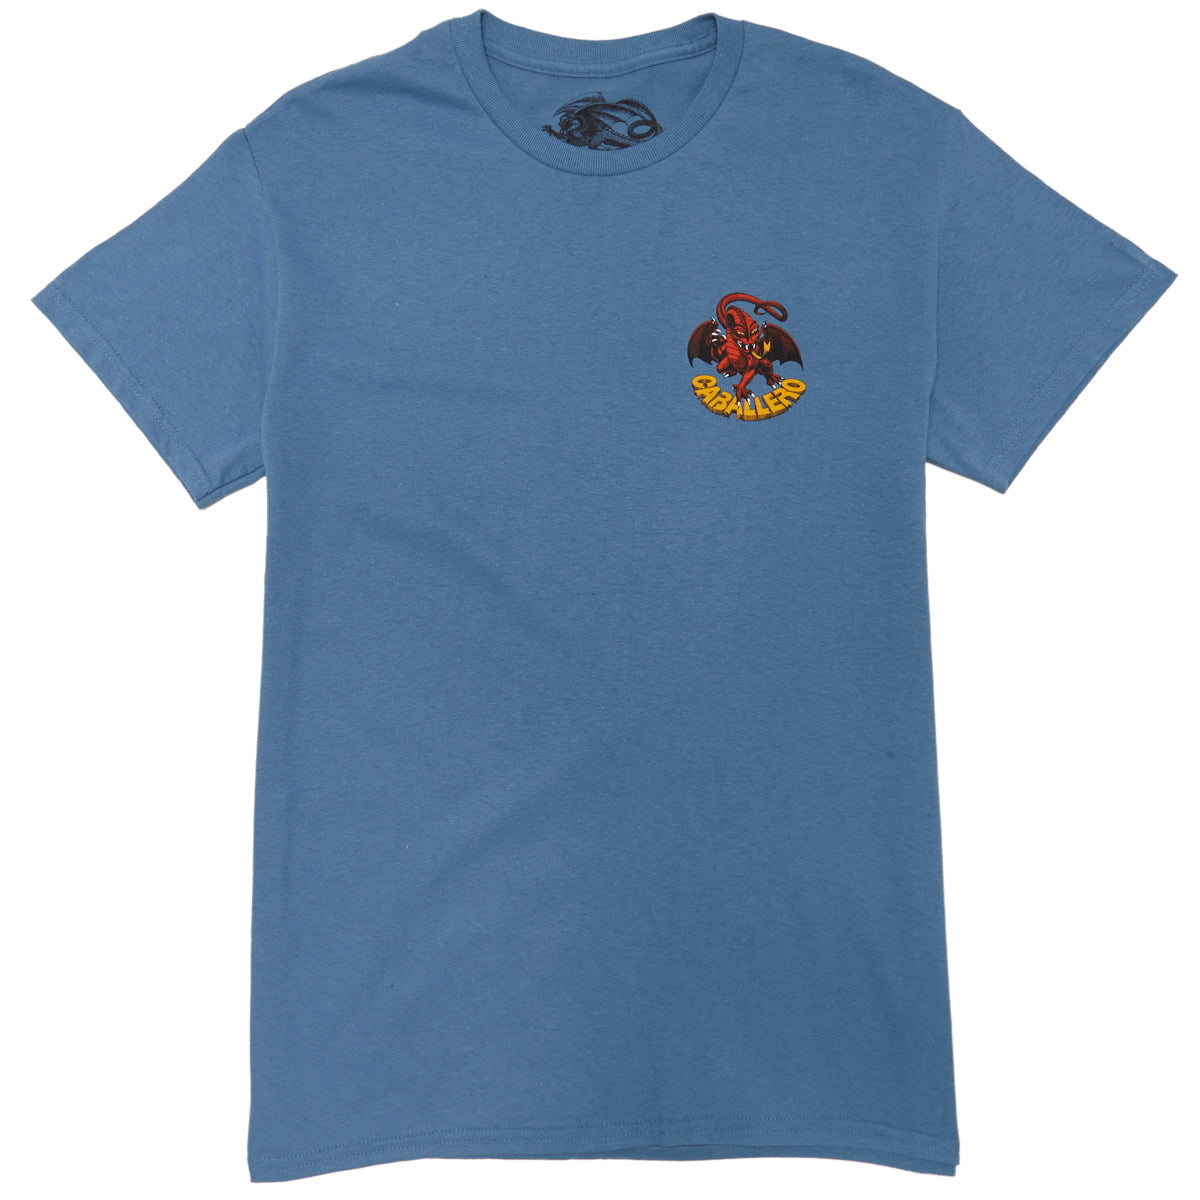 Powell-Peralta Steve Caballero Classic Dragon II T-Shirt - Indigo Blue image 2